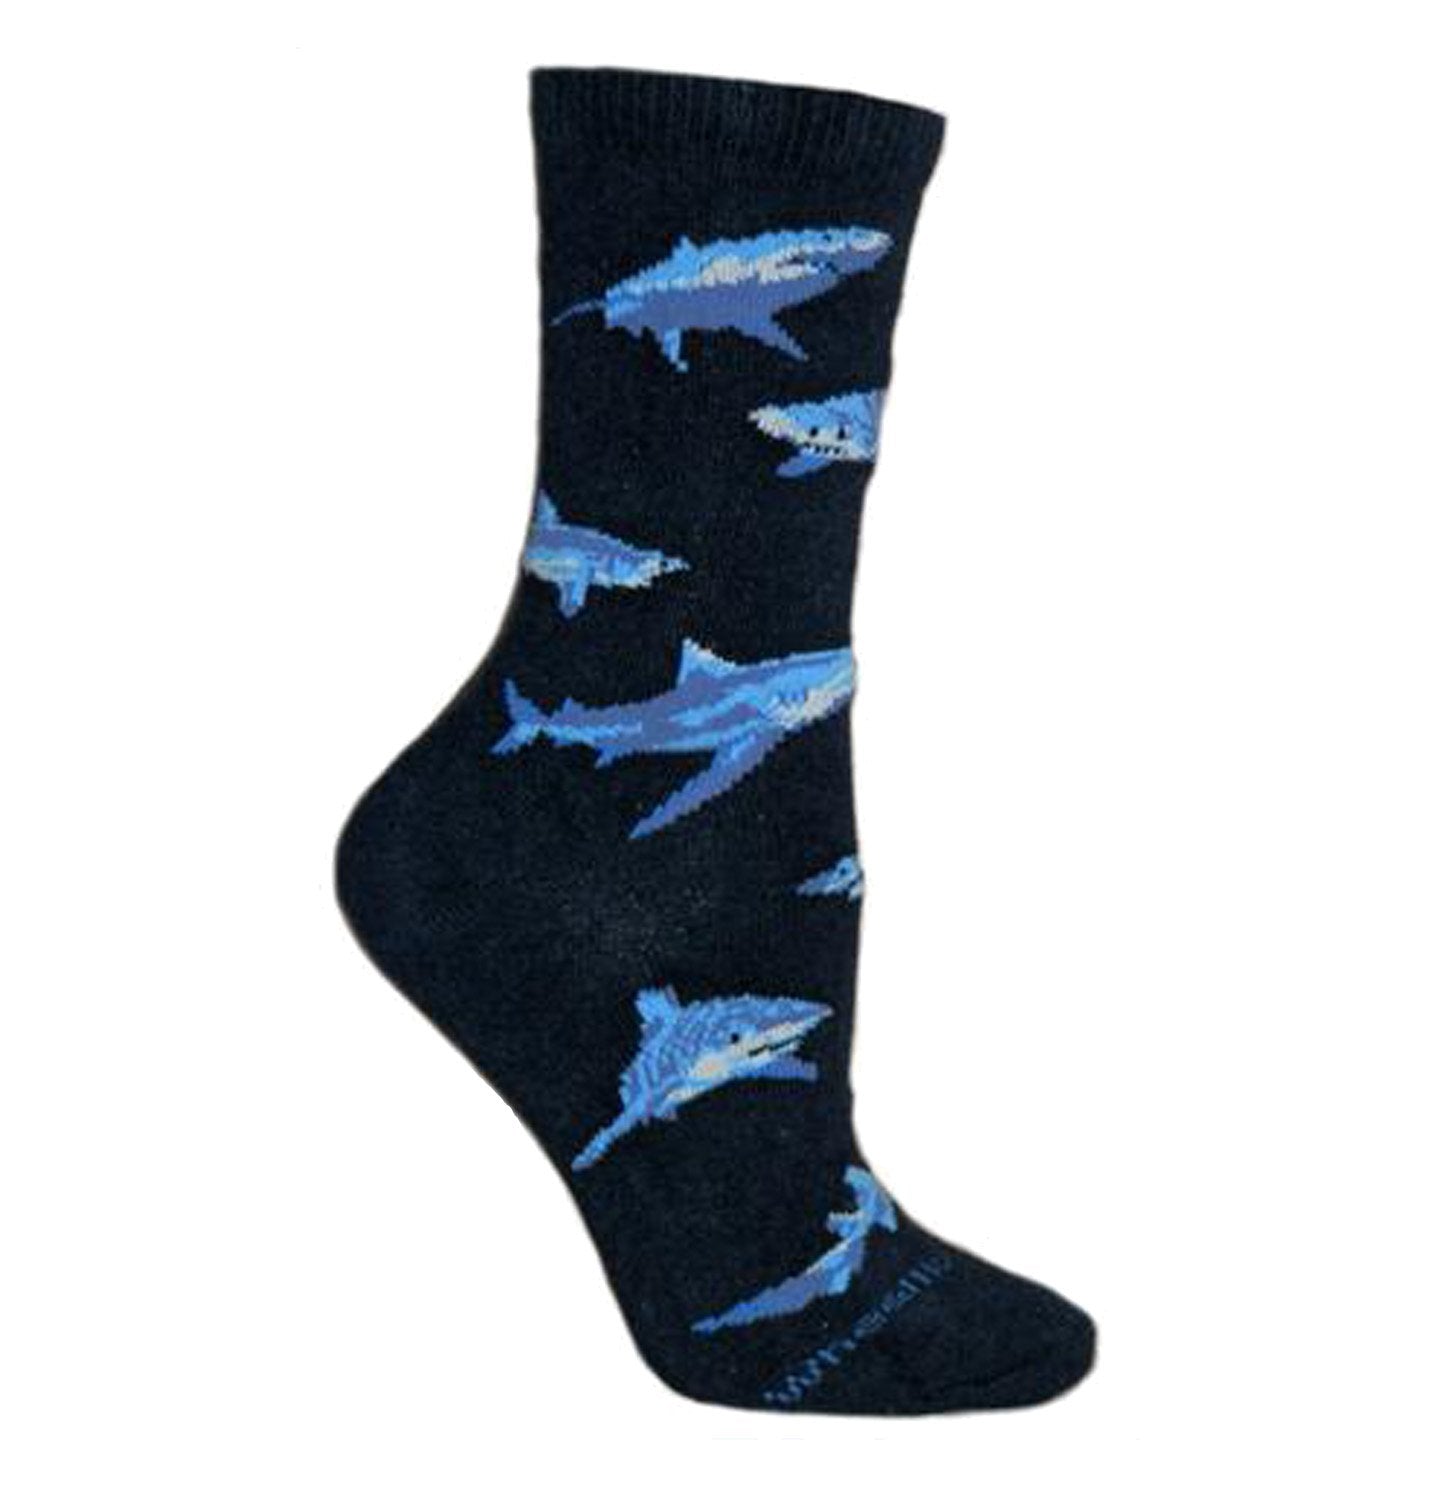 Animal Pride - Sharks on Navy - Adult Cotton Crew Socks